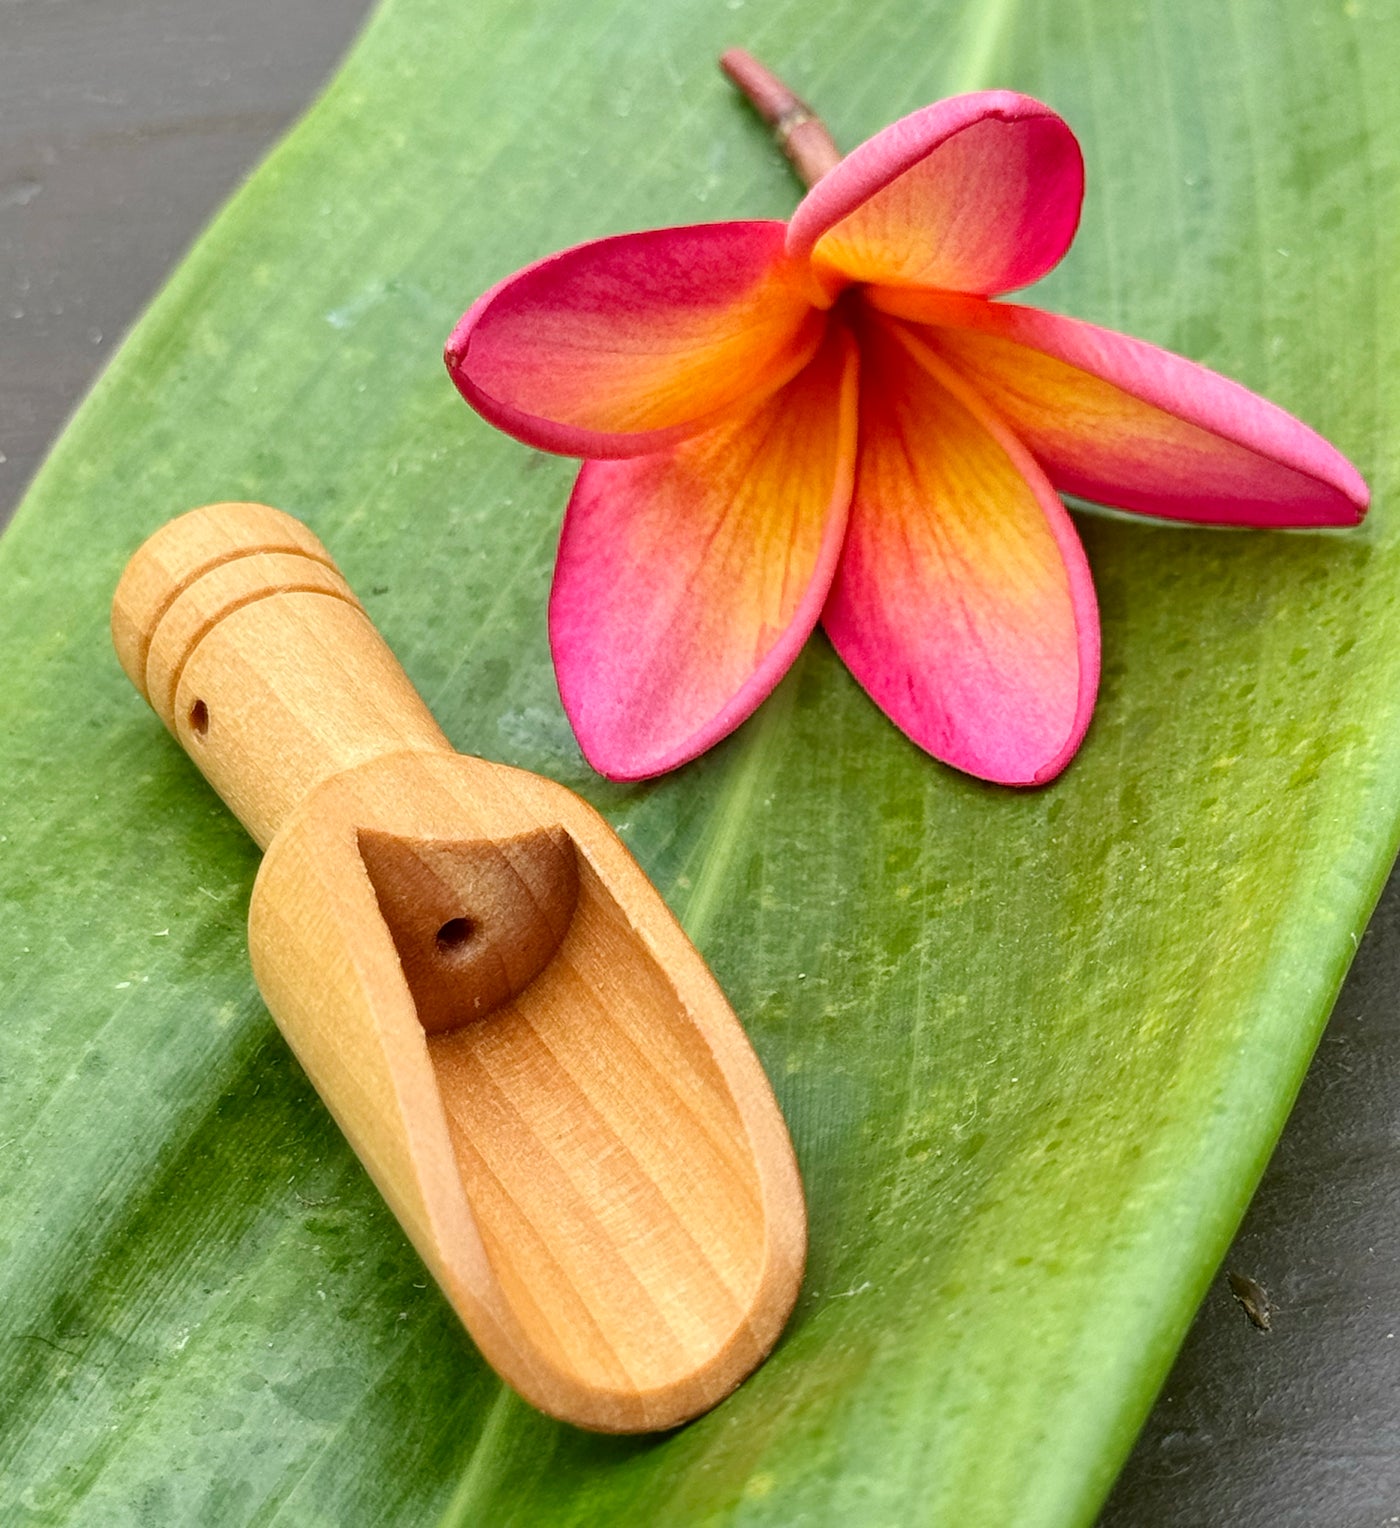 Mini wooden spoon